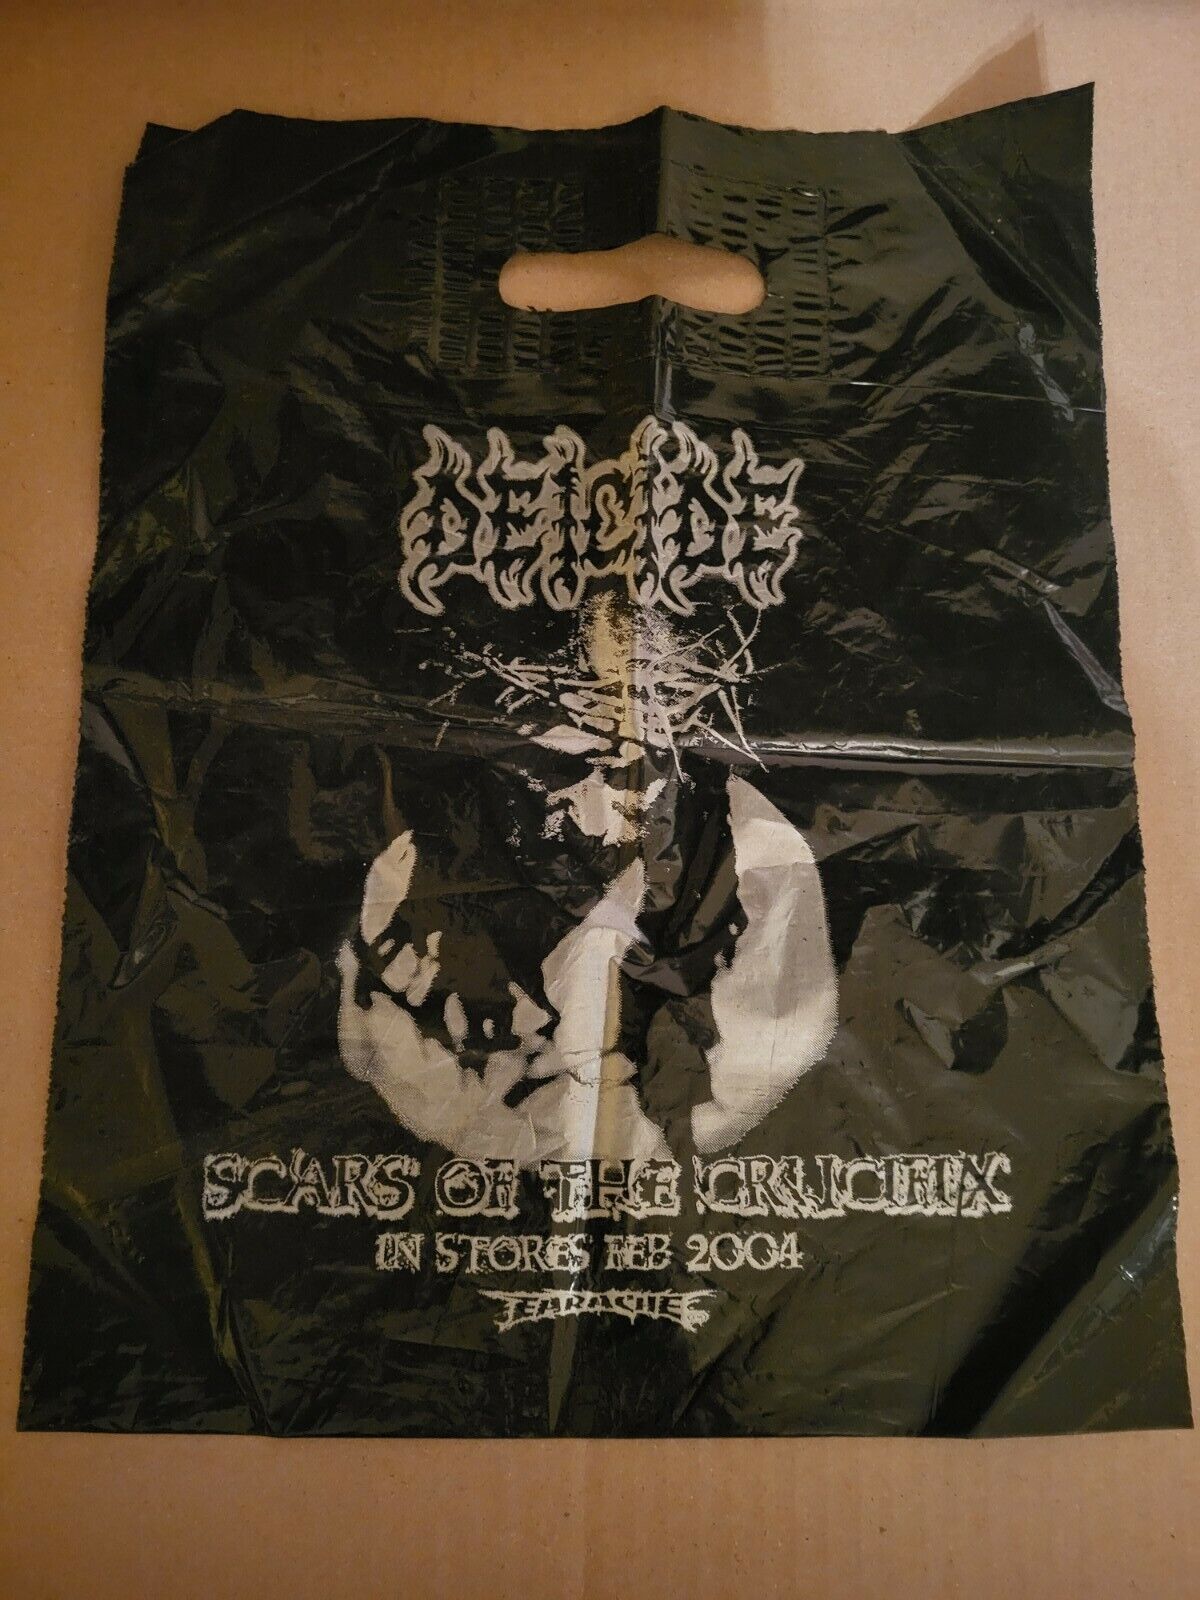 2004 Deicide Scars of the Crucifix promo blackplastic bag w/cover art very rare 